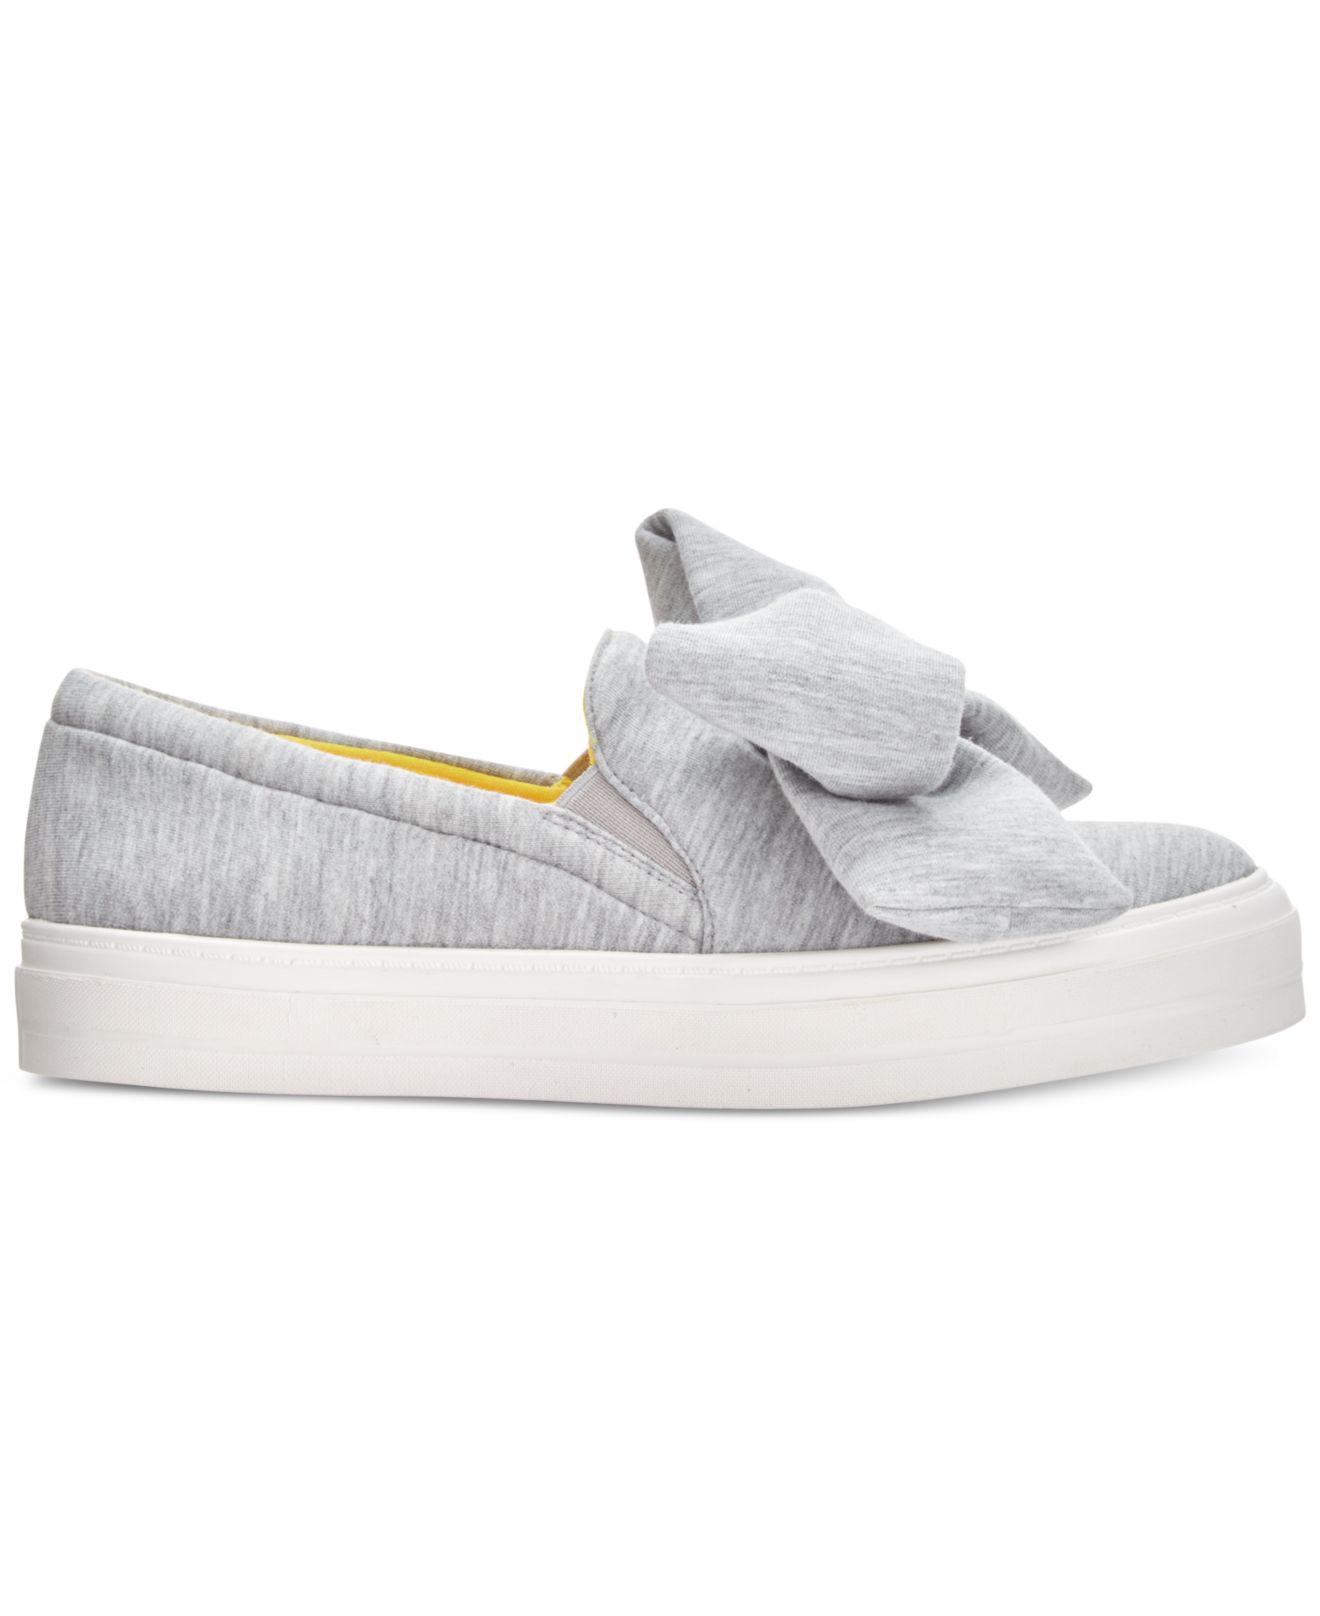 Nine West Onosha Bow Flatform Sneakers in Gray | Lyst